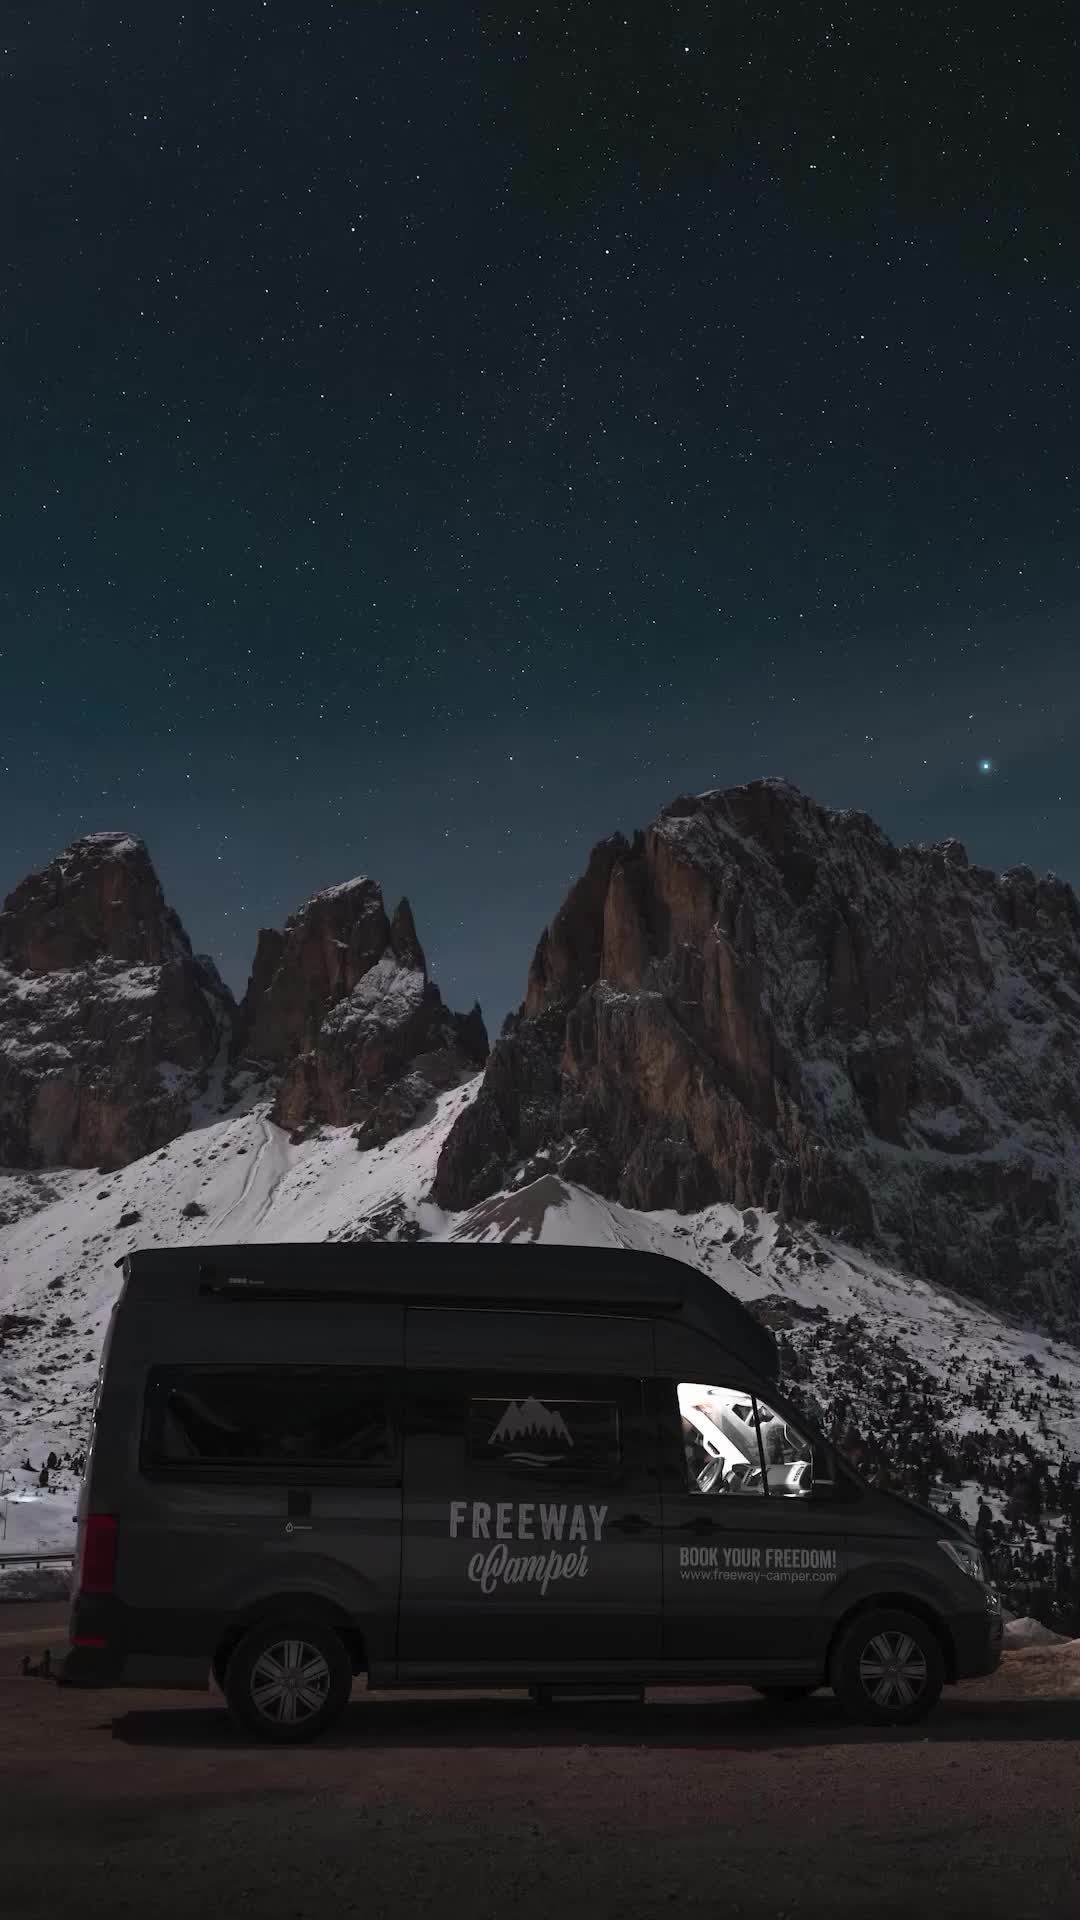 Winter Van-Life Adventure in the Dolomites, Italy